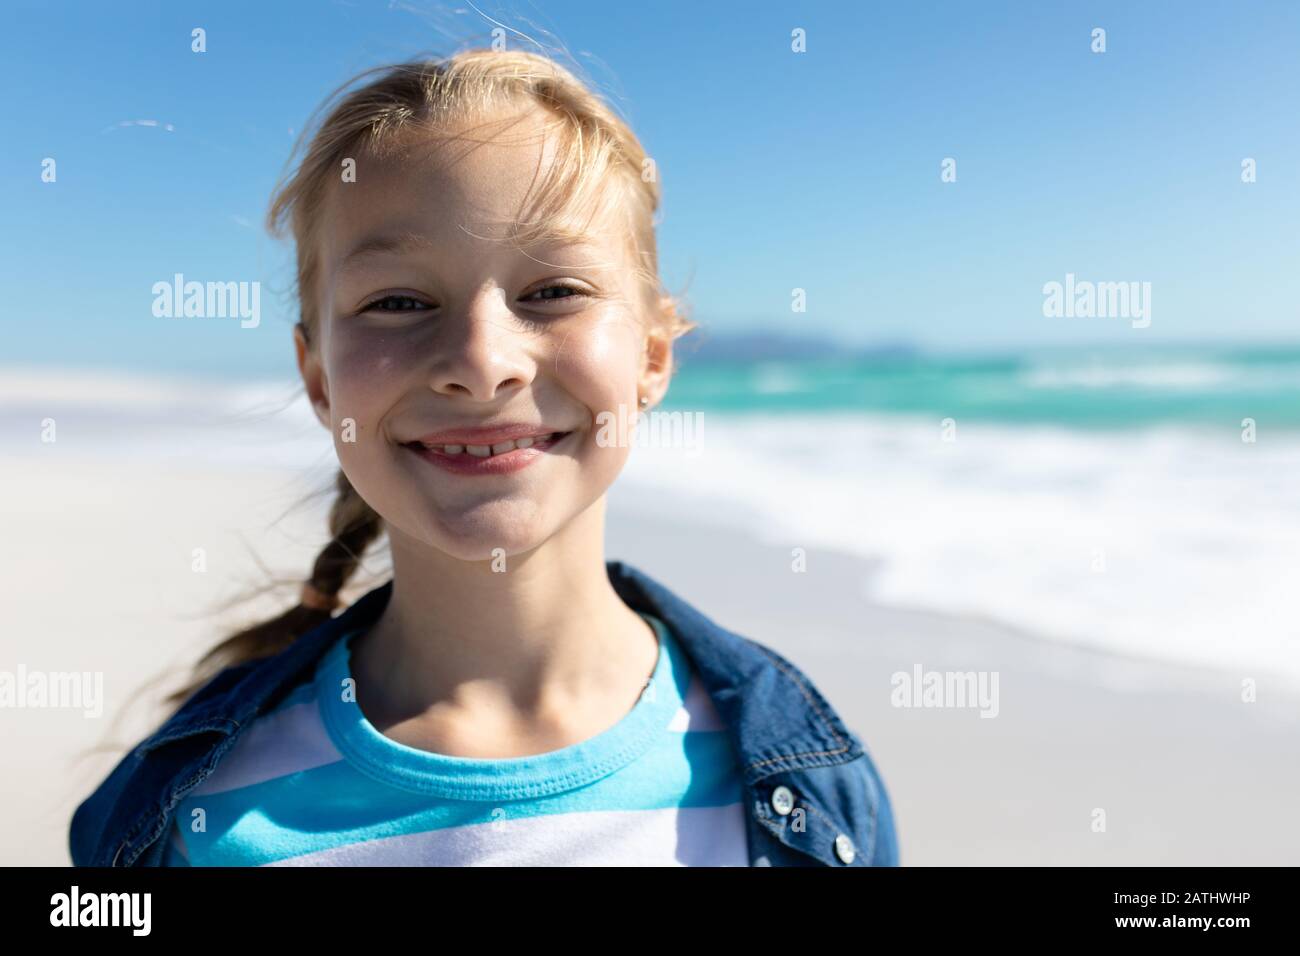 Girl enjoying free time at the beach Stock Photo